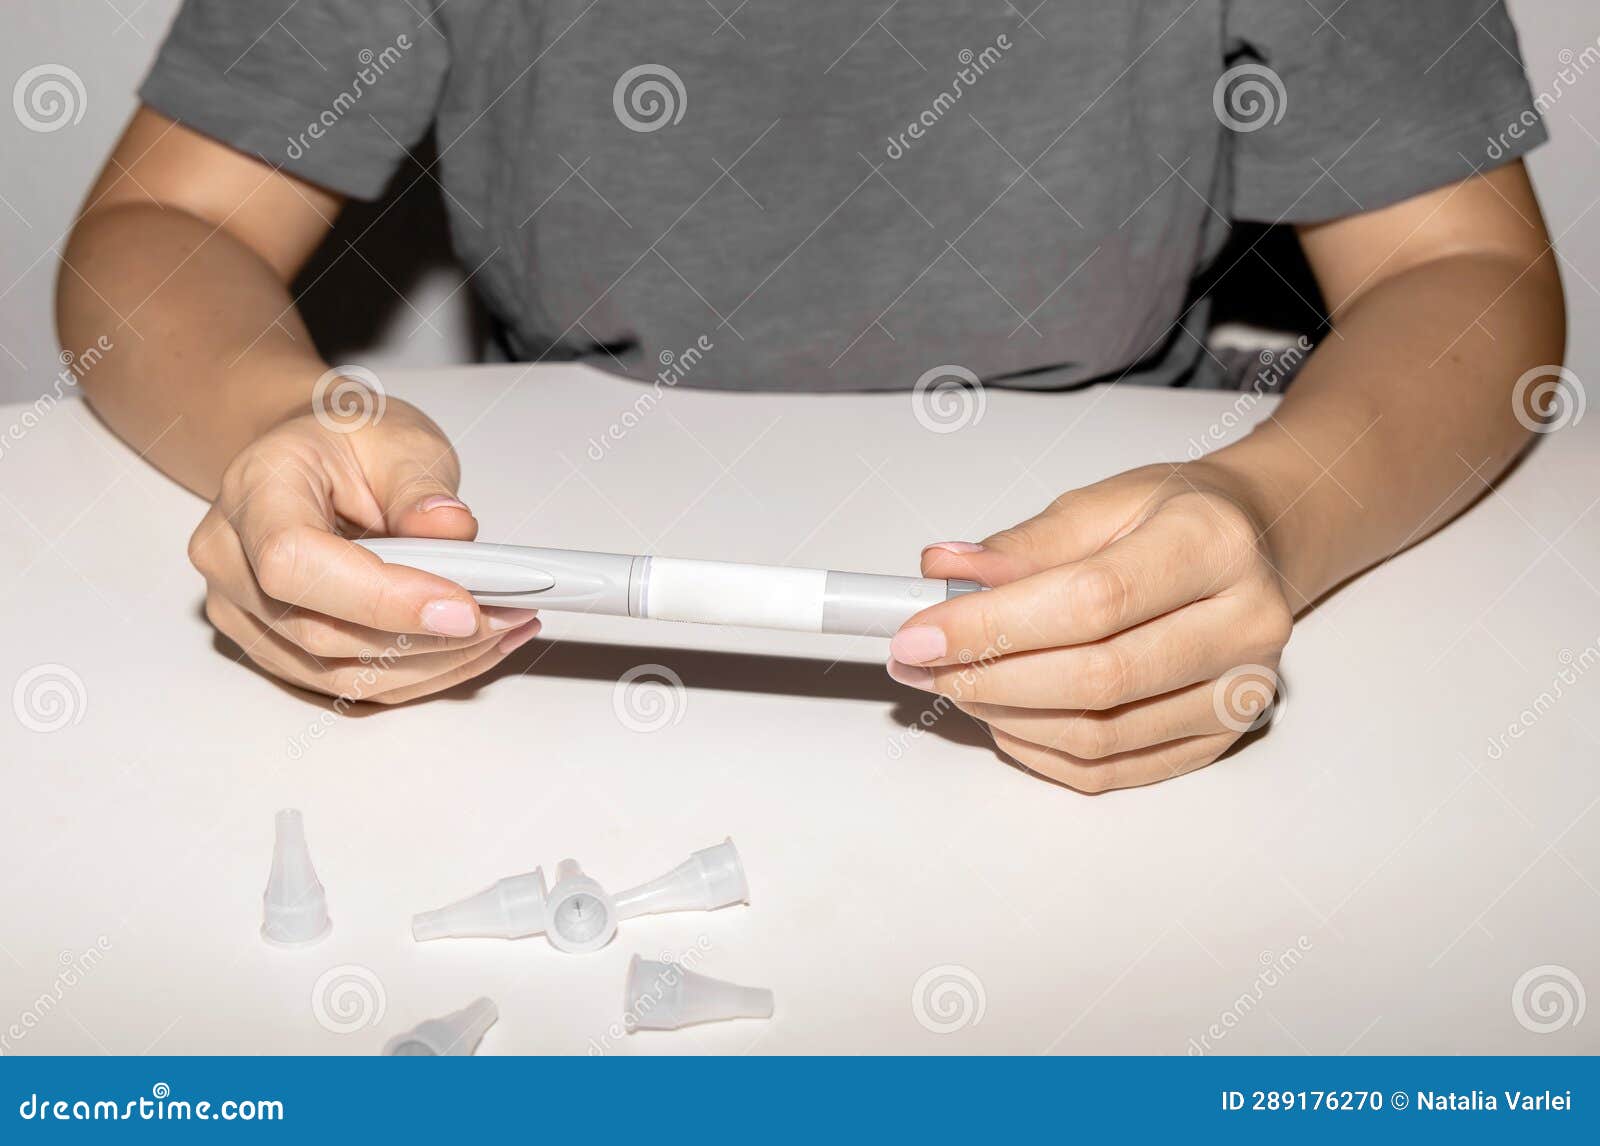 female hands holding an insulin pen. ozempic insulin injection pen.